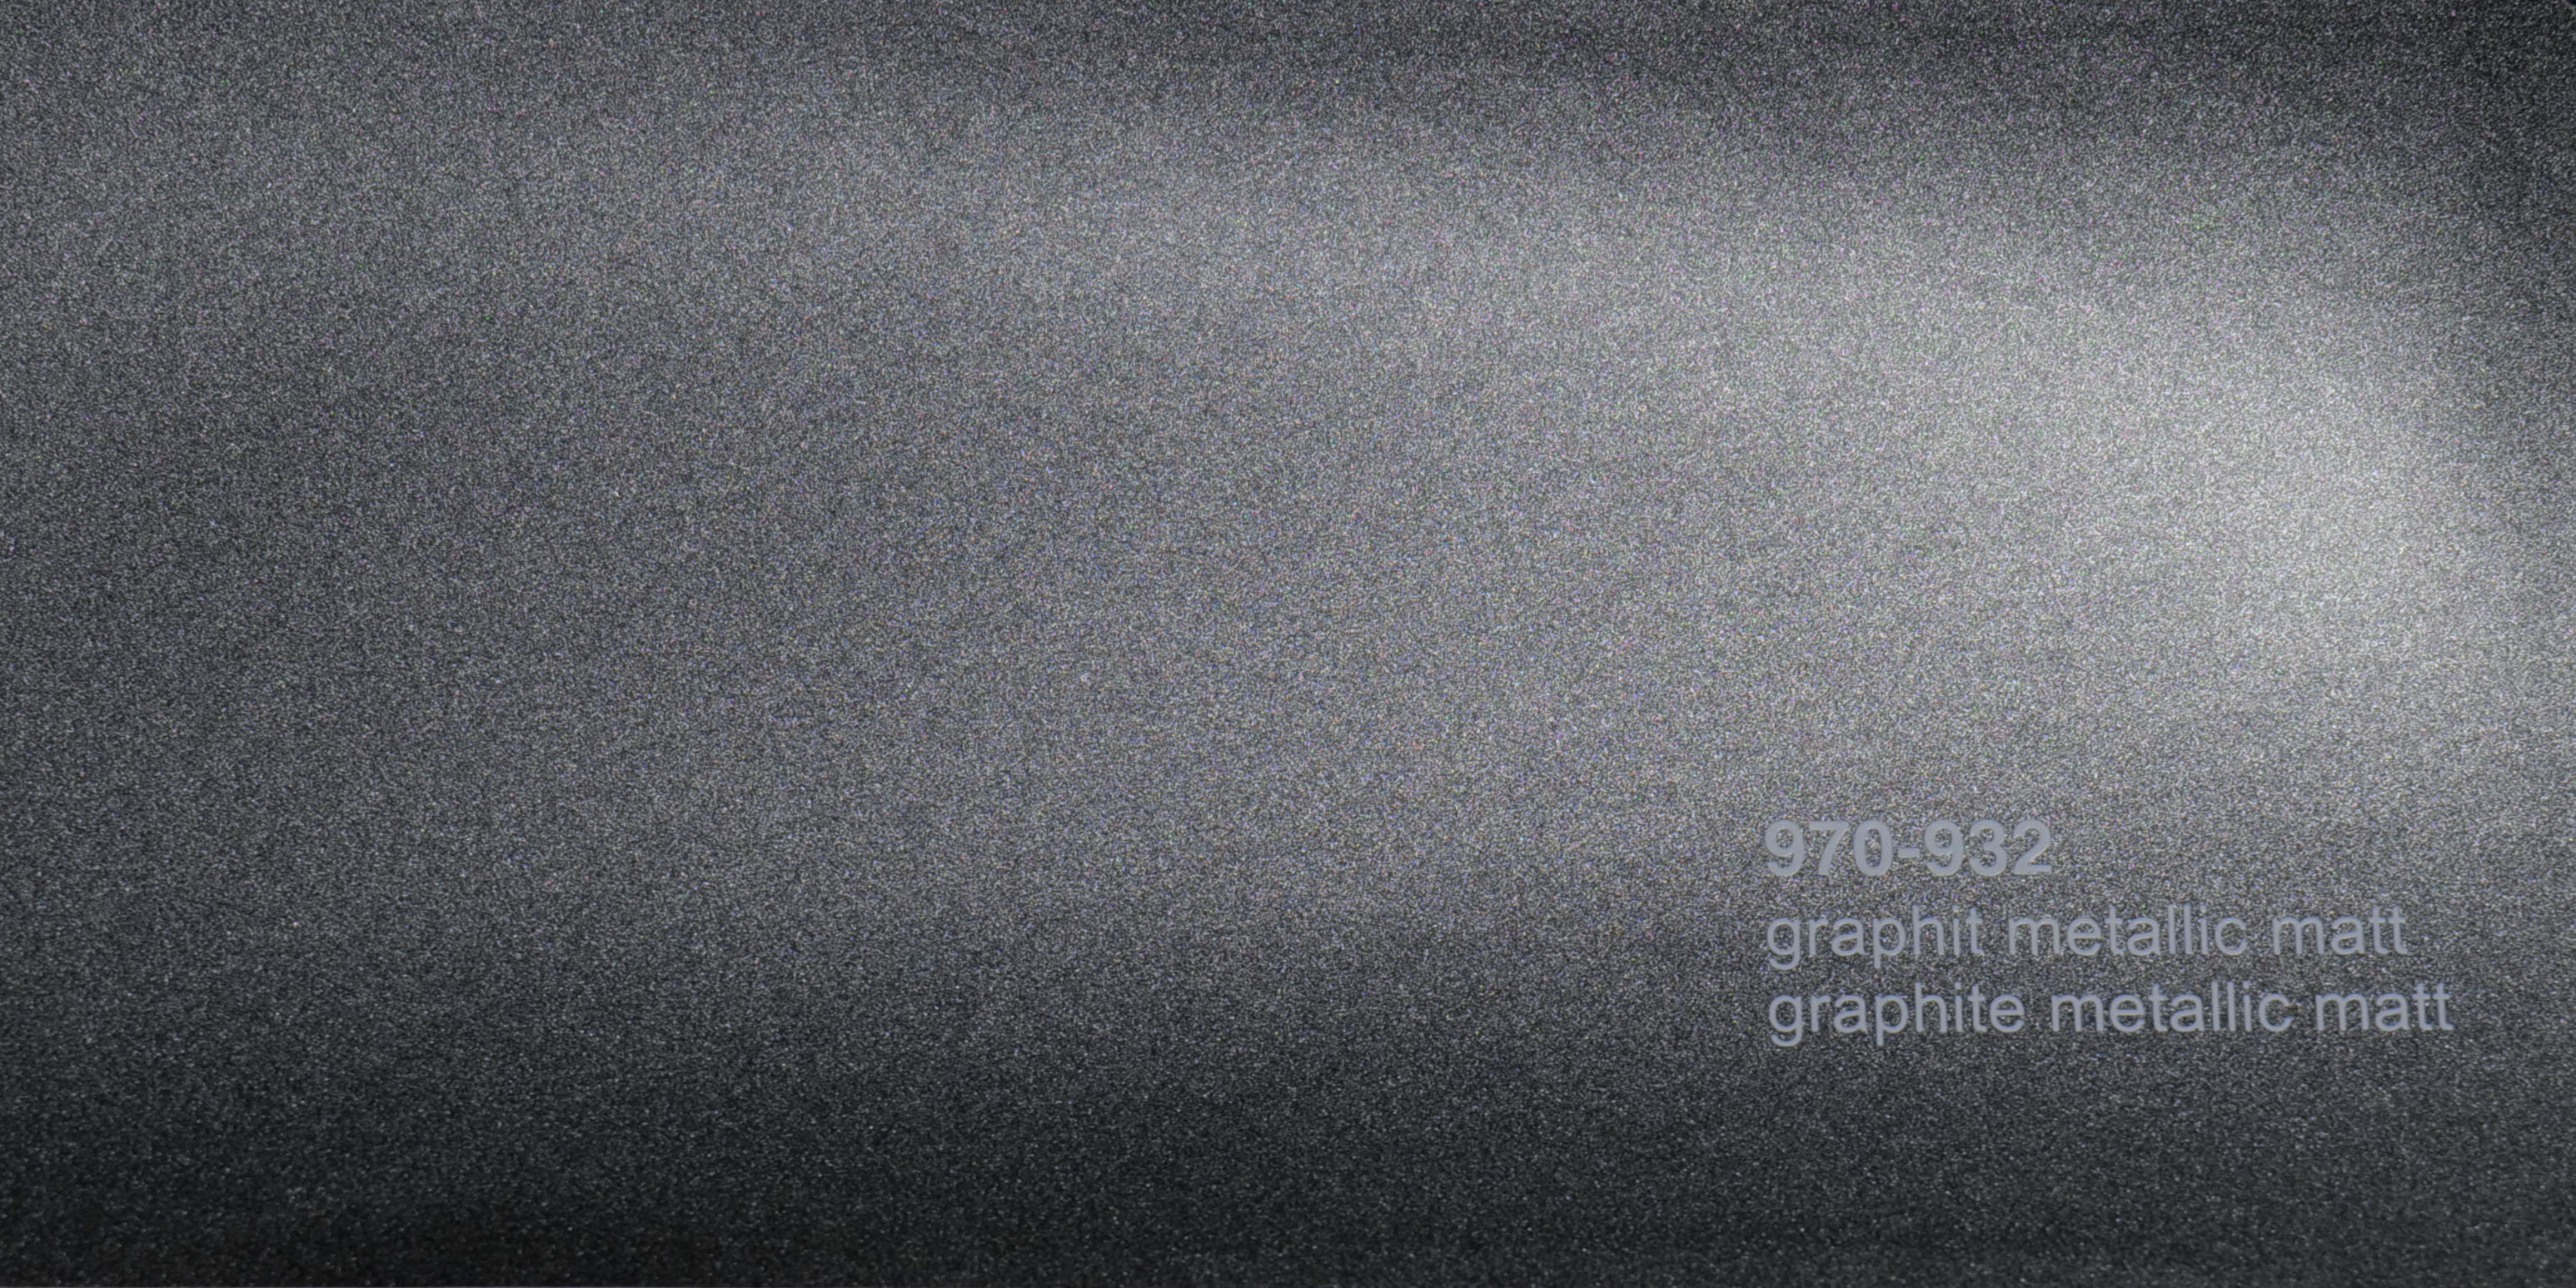 Oracal 970RA - 932 Graphit Metallic Matt